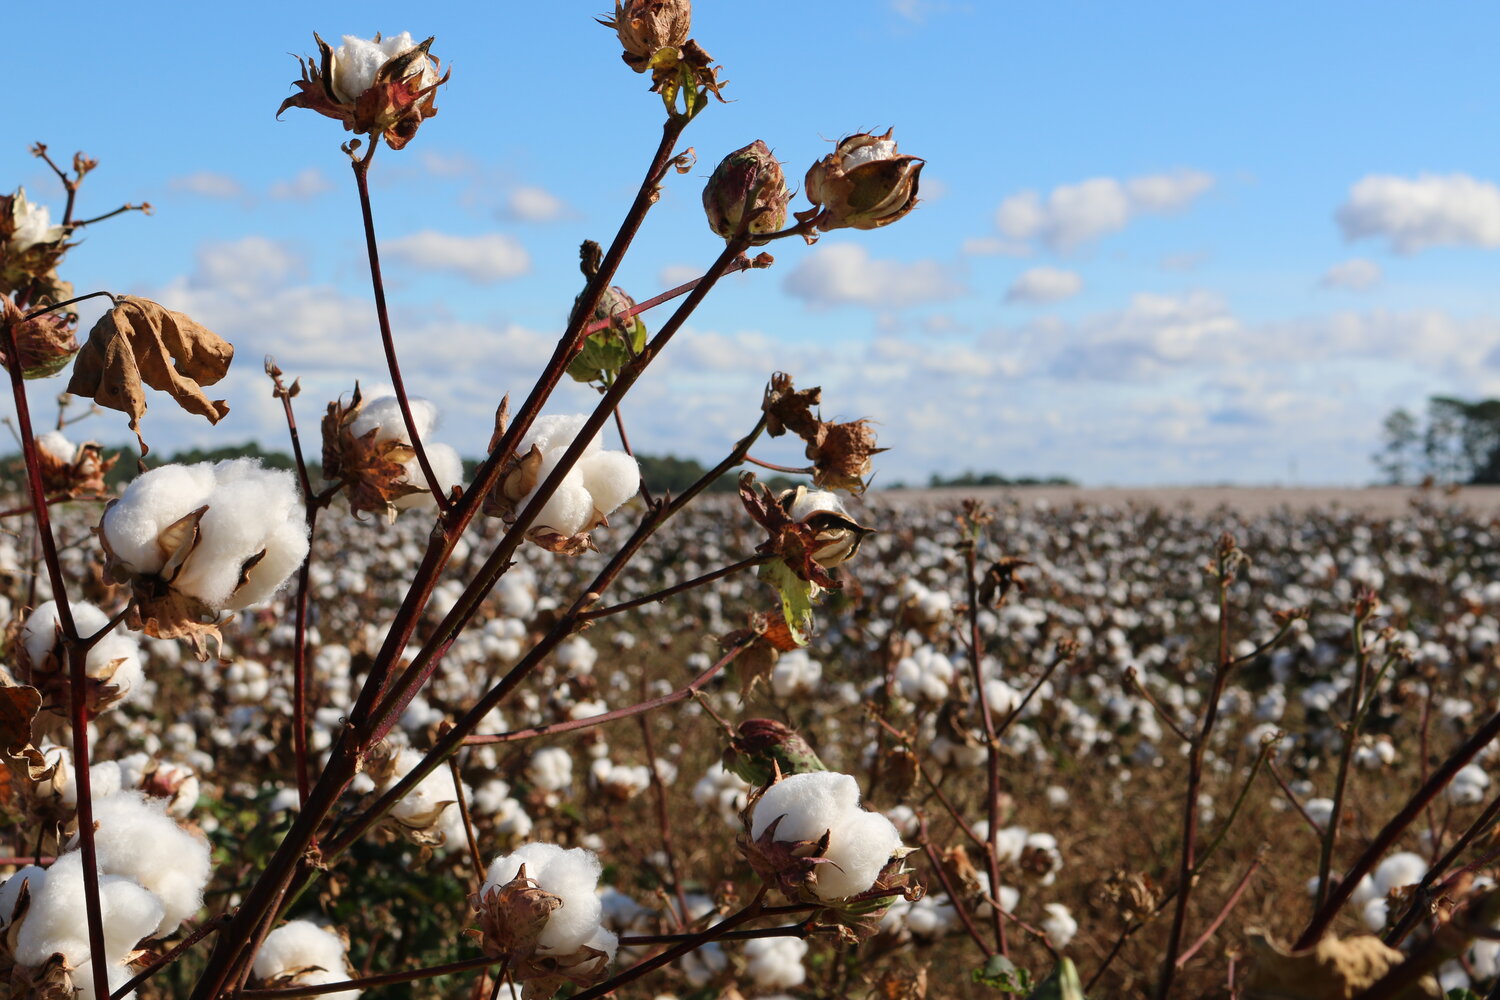 Cotton — Louisiana Ag in the Classroom